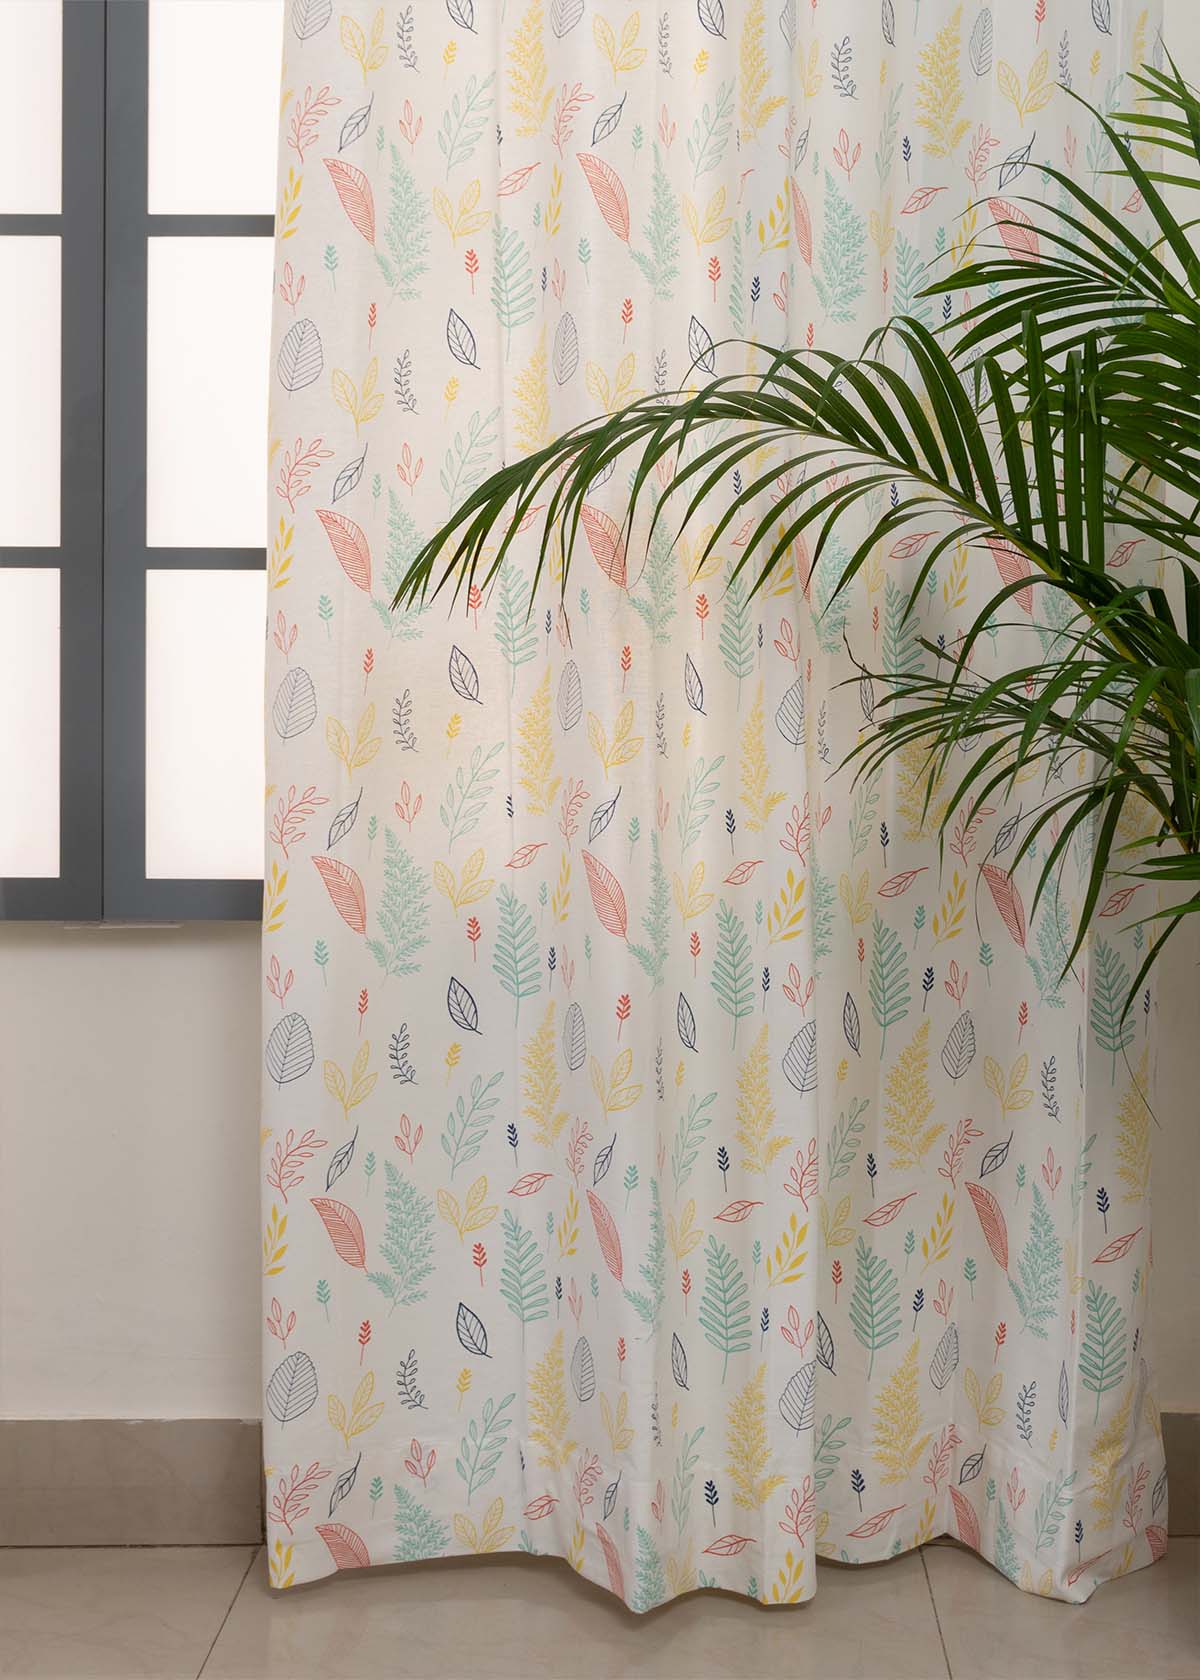 Rustling Leaves Printed Cotton Curtain - Multicolor - Standard